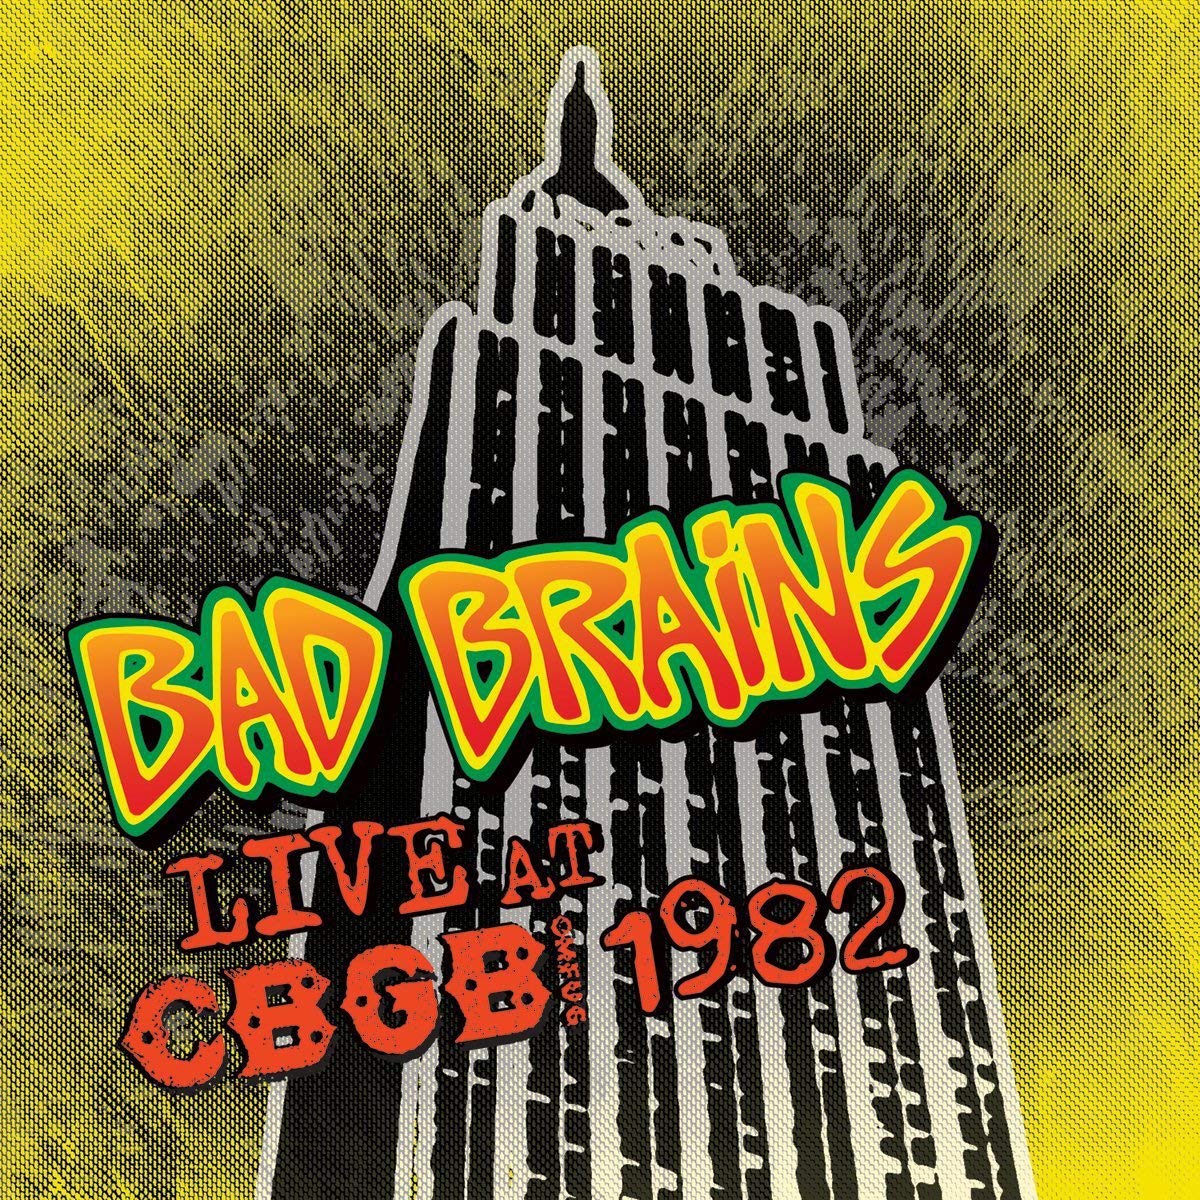  BAD BRAINS - LIVE AT CBGB'S 1982 $20 @ 2010 MVD Audio / CBGB 